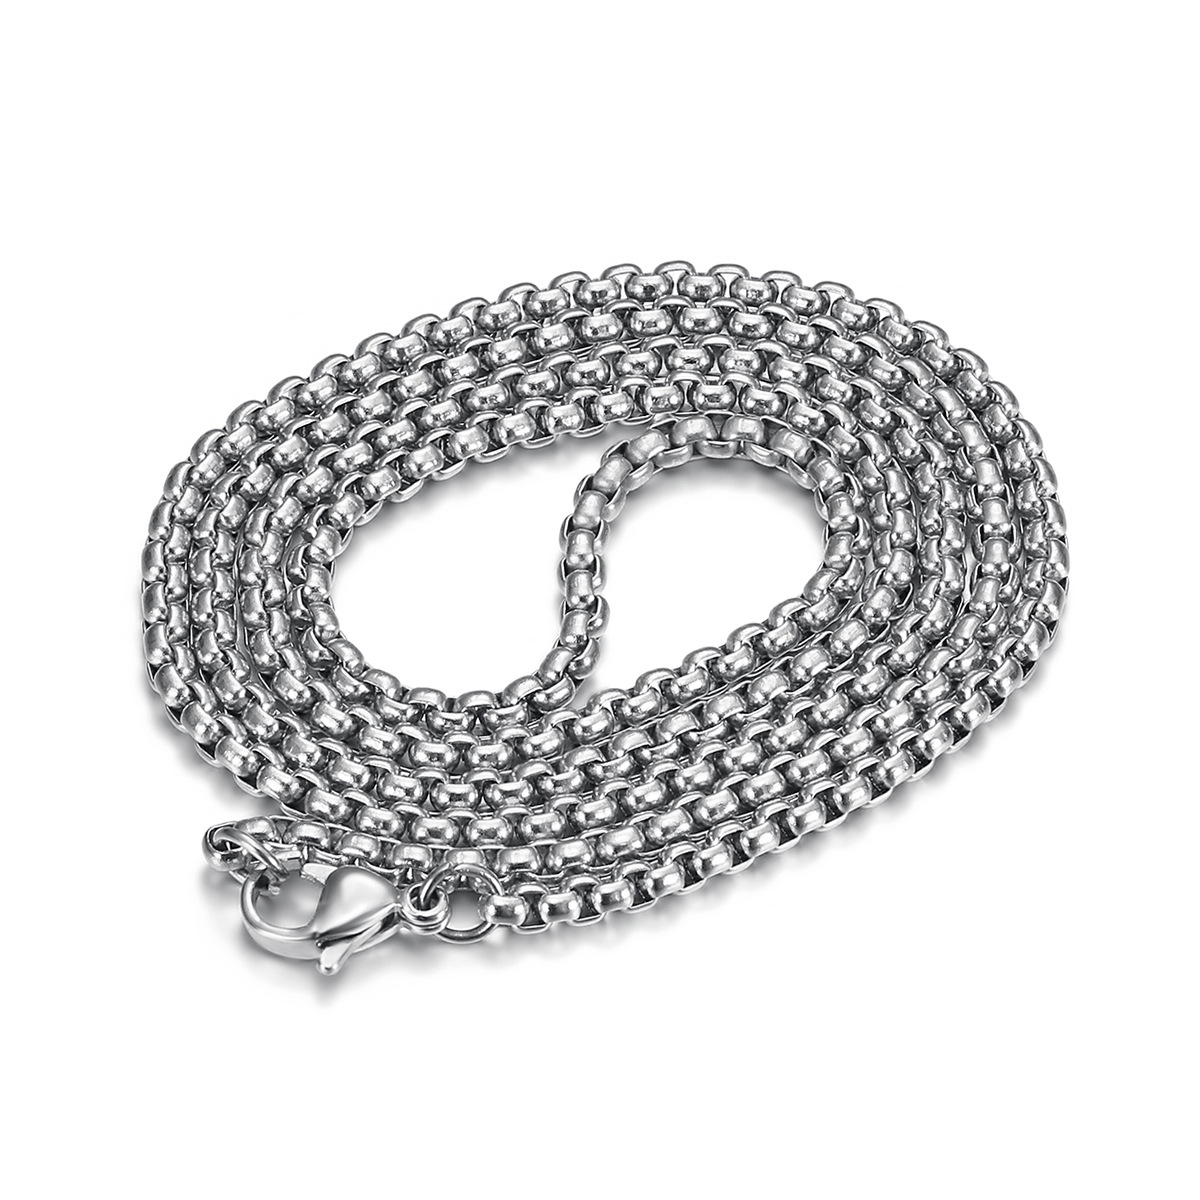 4:D necklace chain 600mm